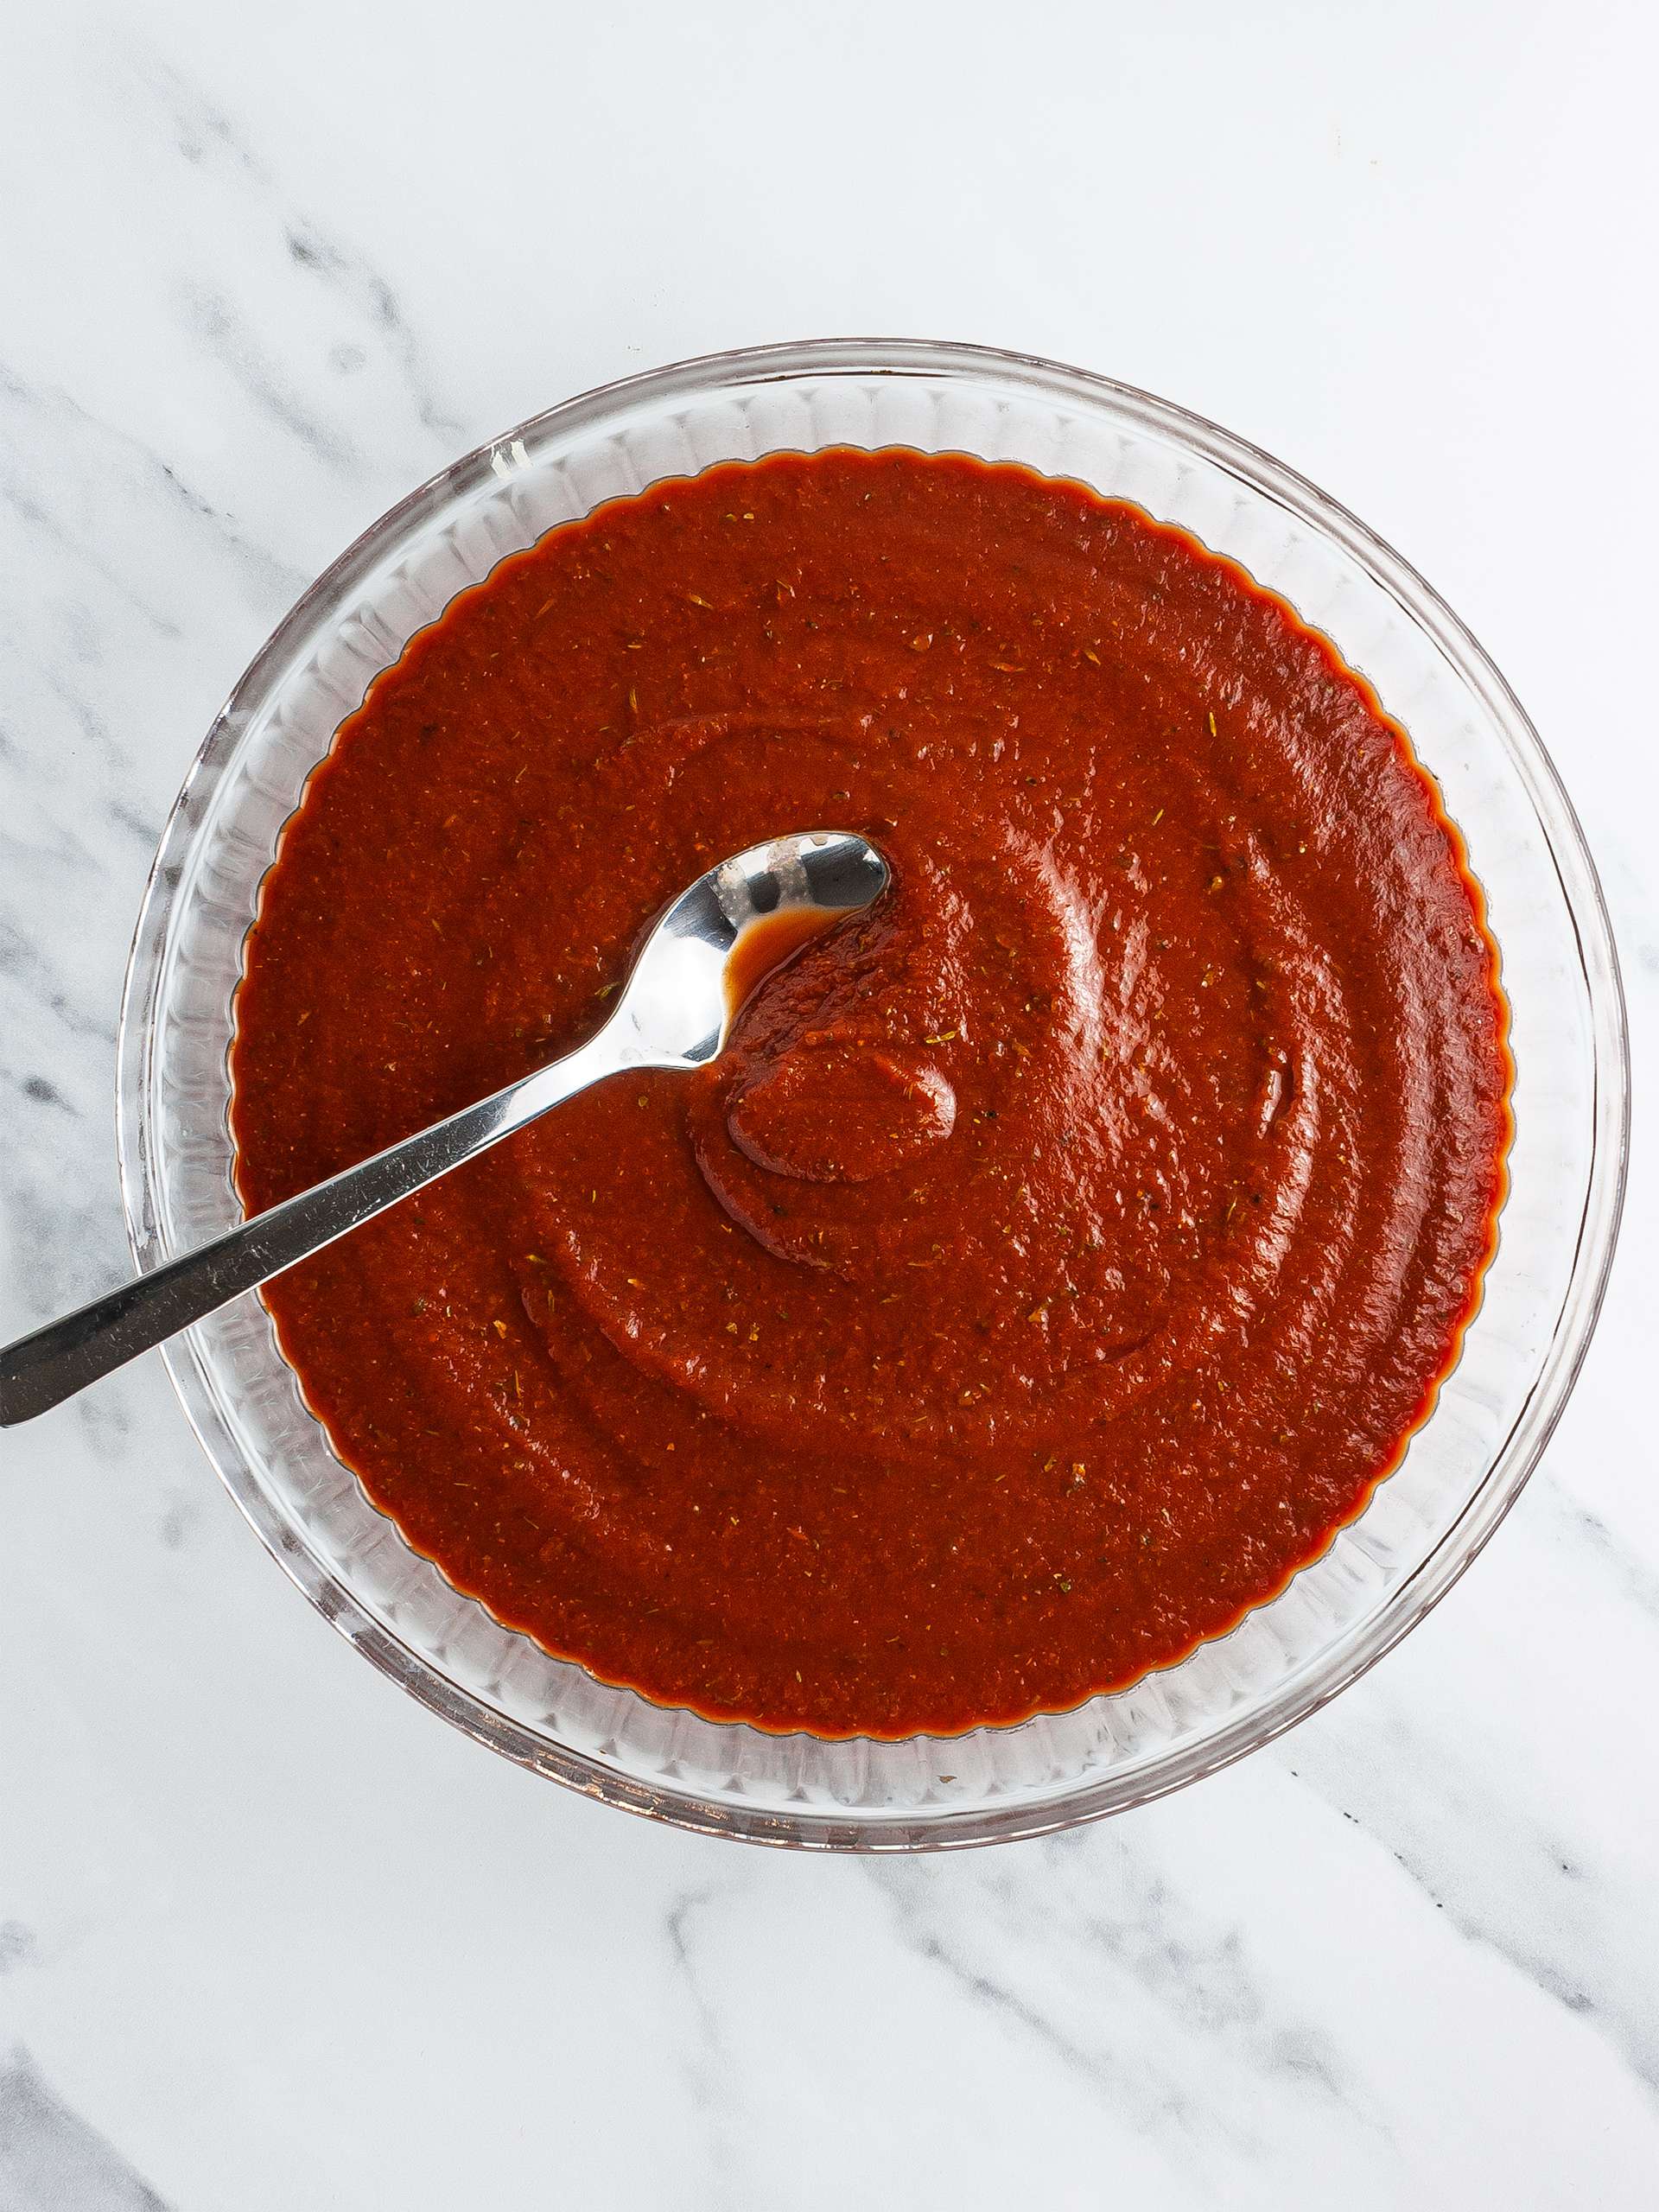 Tomato sauce spread over a baking dish